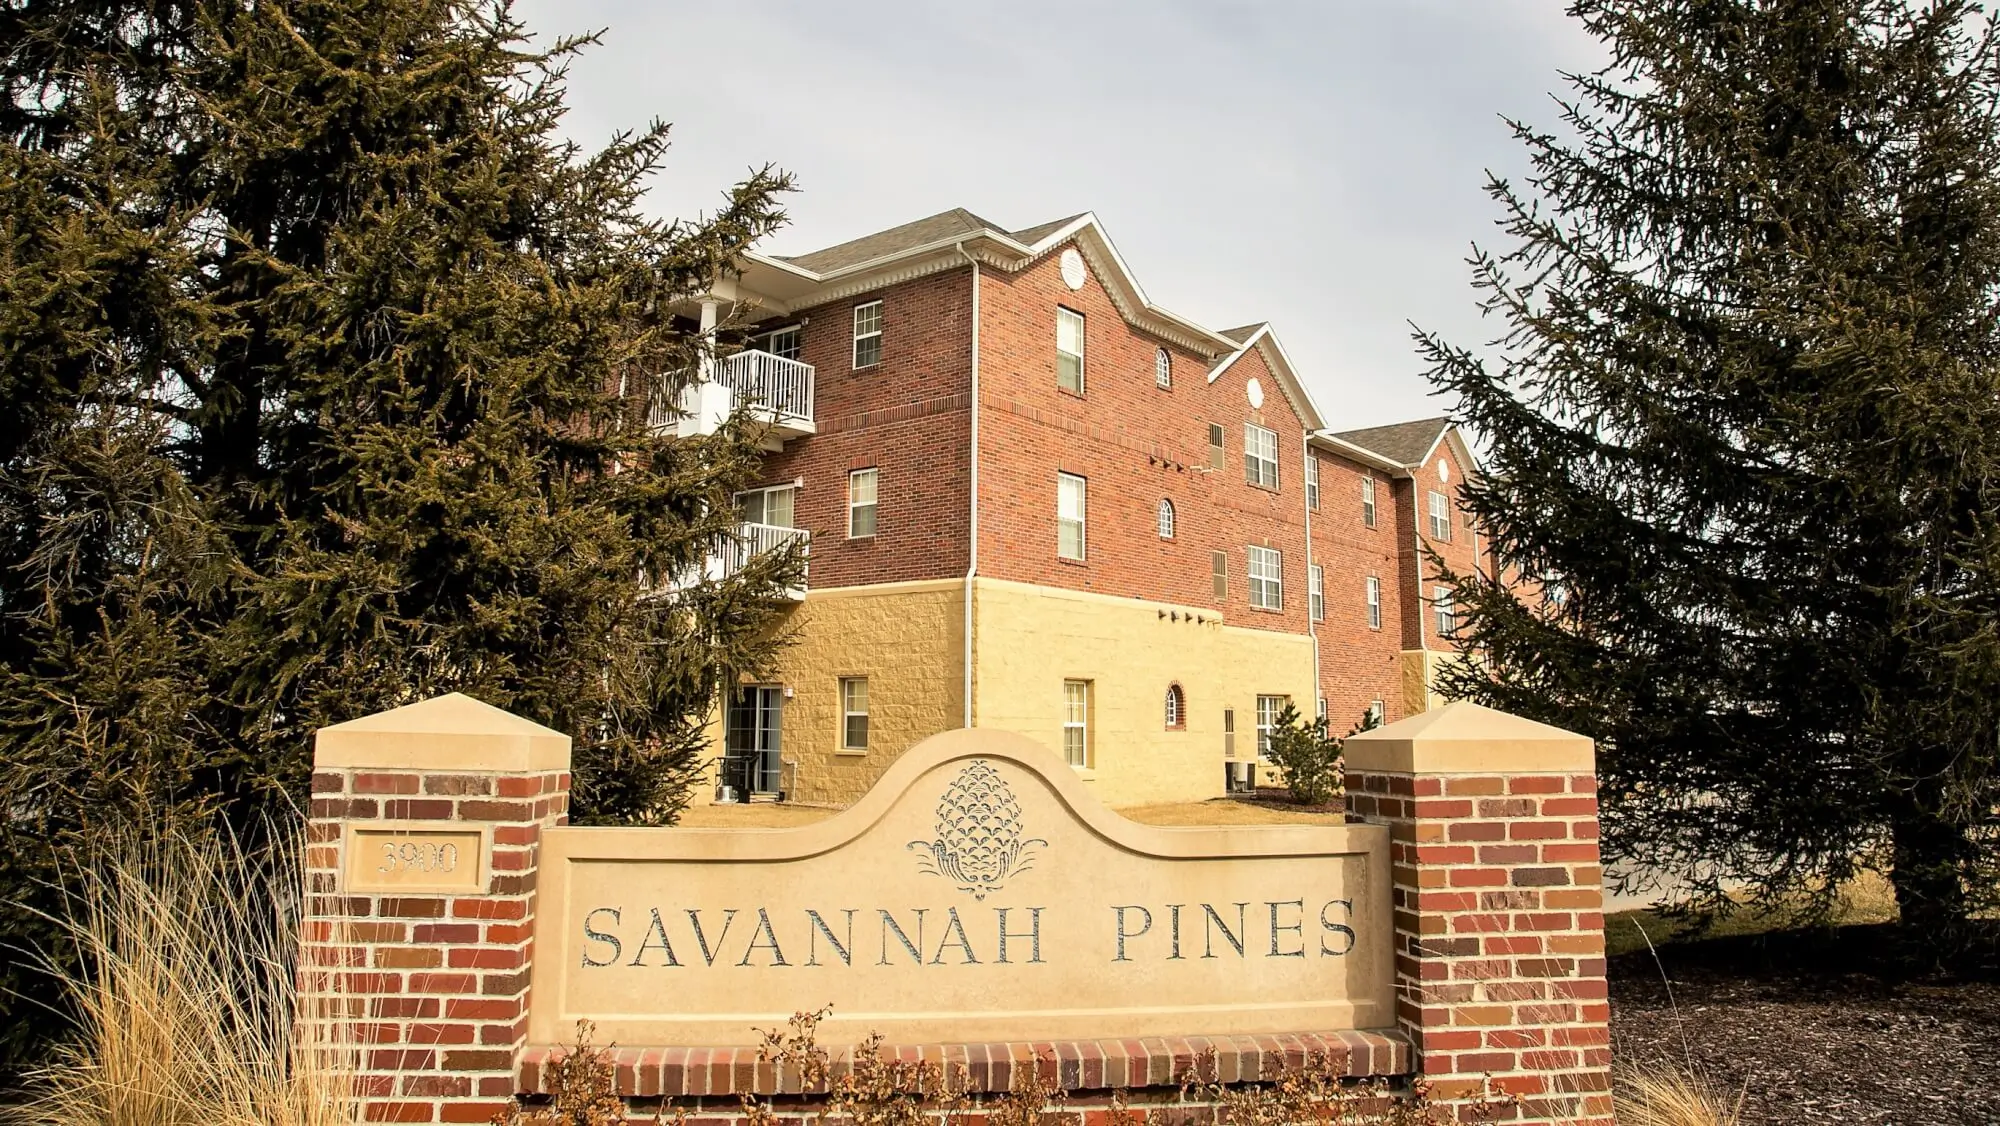 Entry sign at Savannah Pine Retirement Community in Lincoln, Nebraska